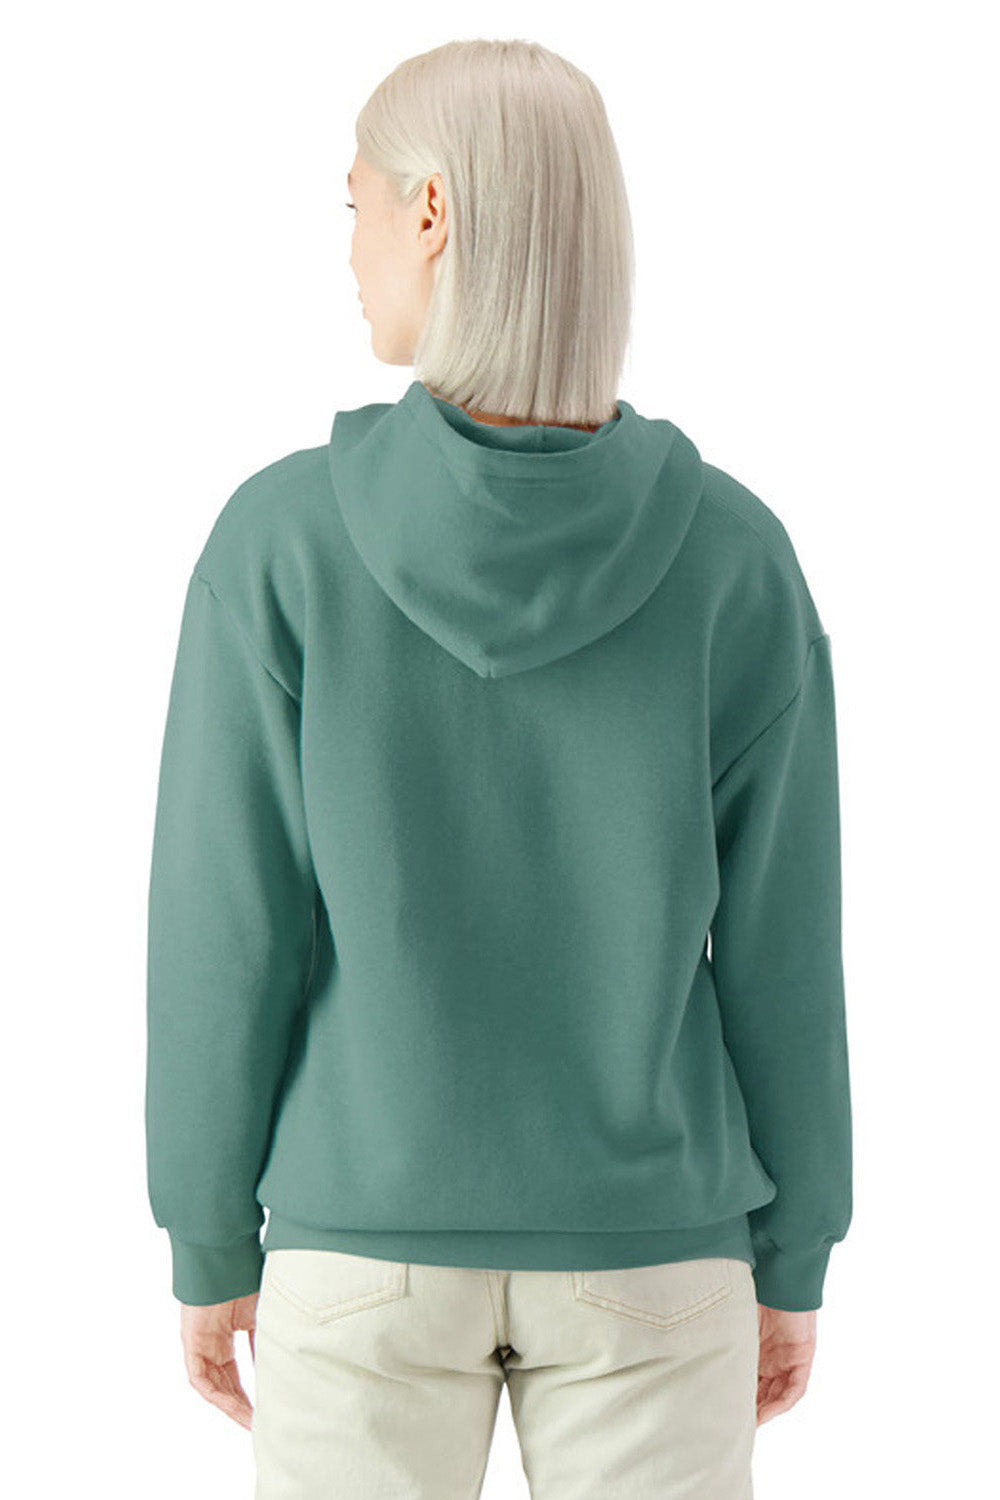 American Apparel RF498 Mens ReFlex Fleece Hooded Sweatshirt Hoodie Arctic Green Model Back